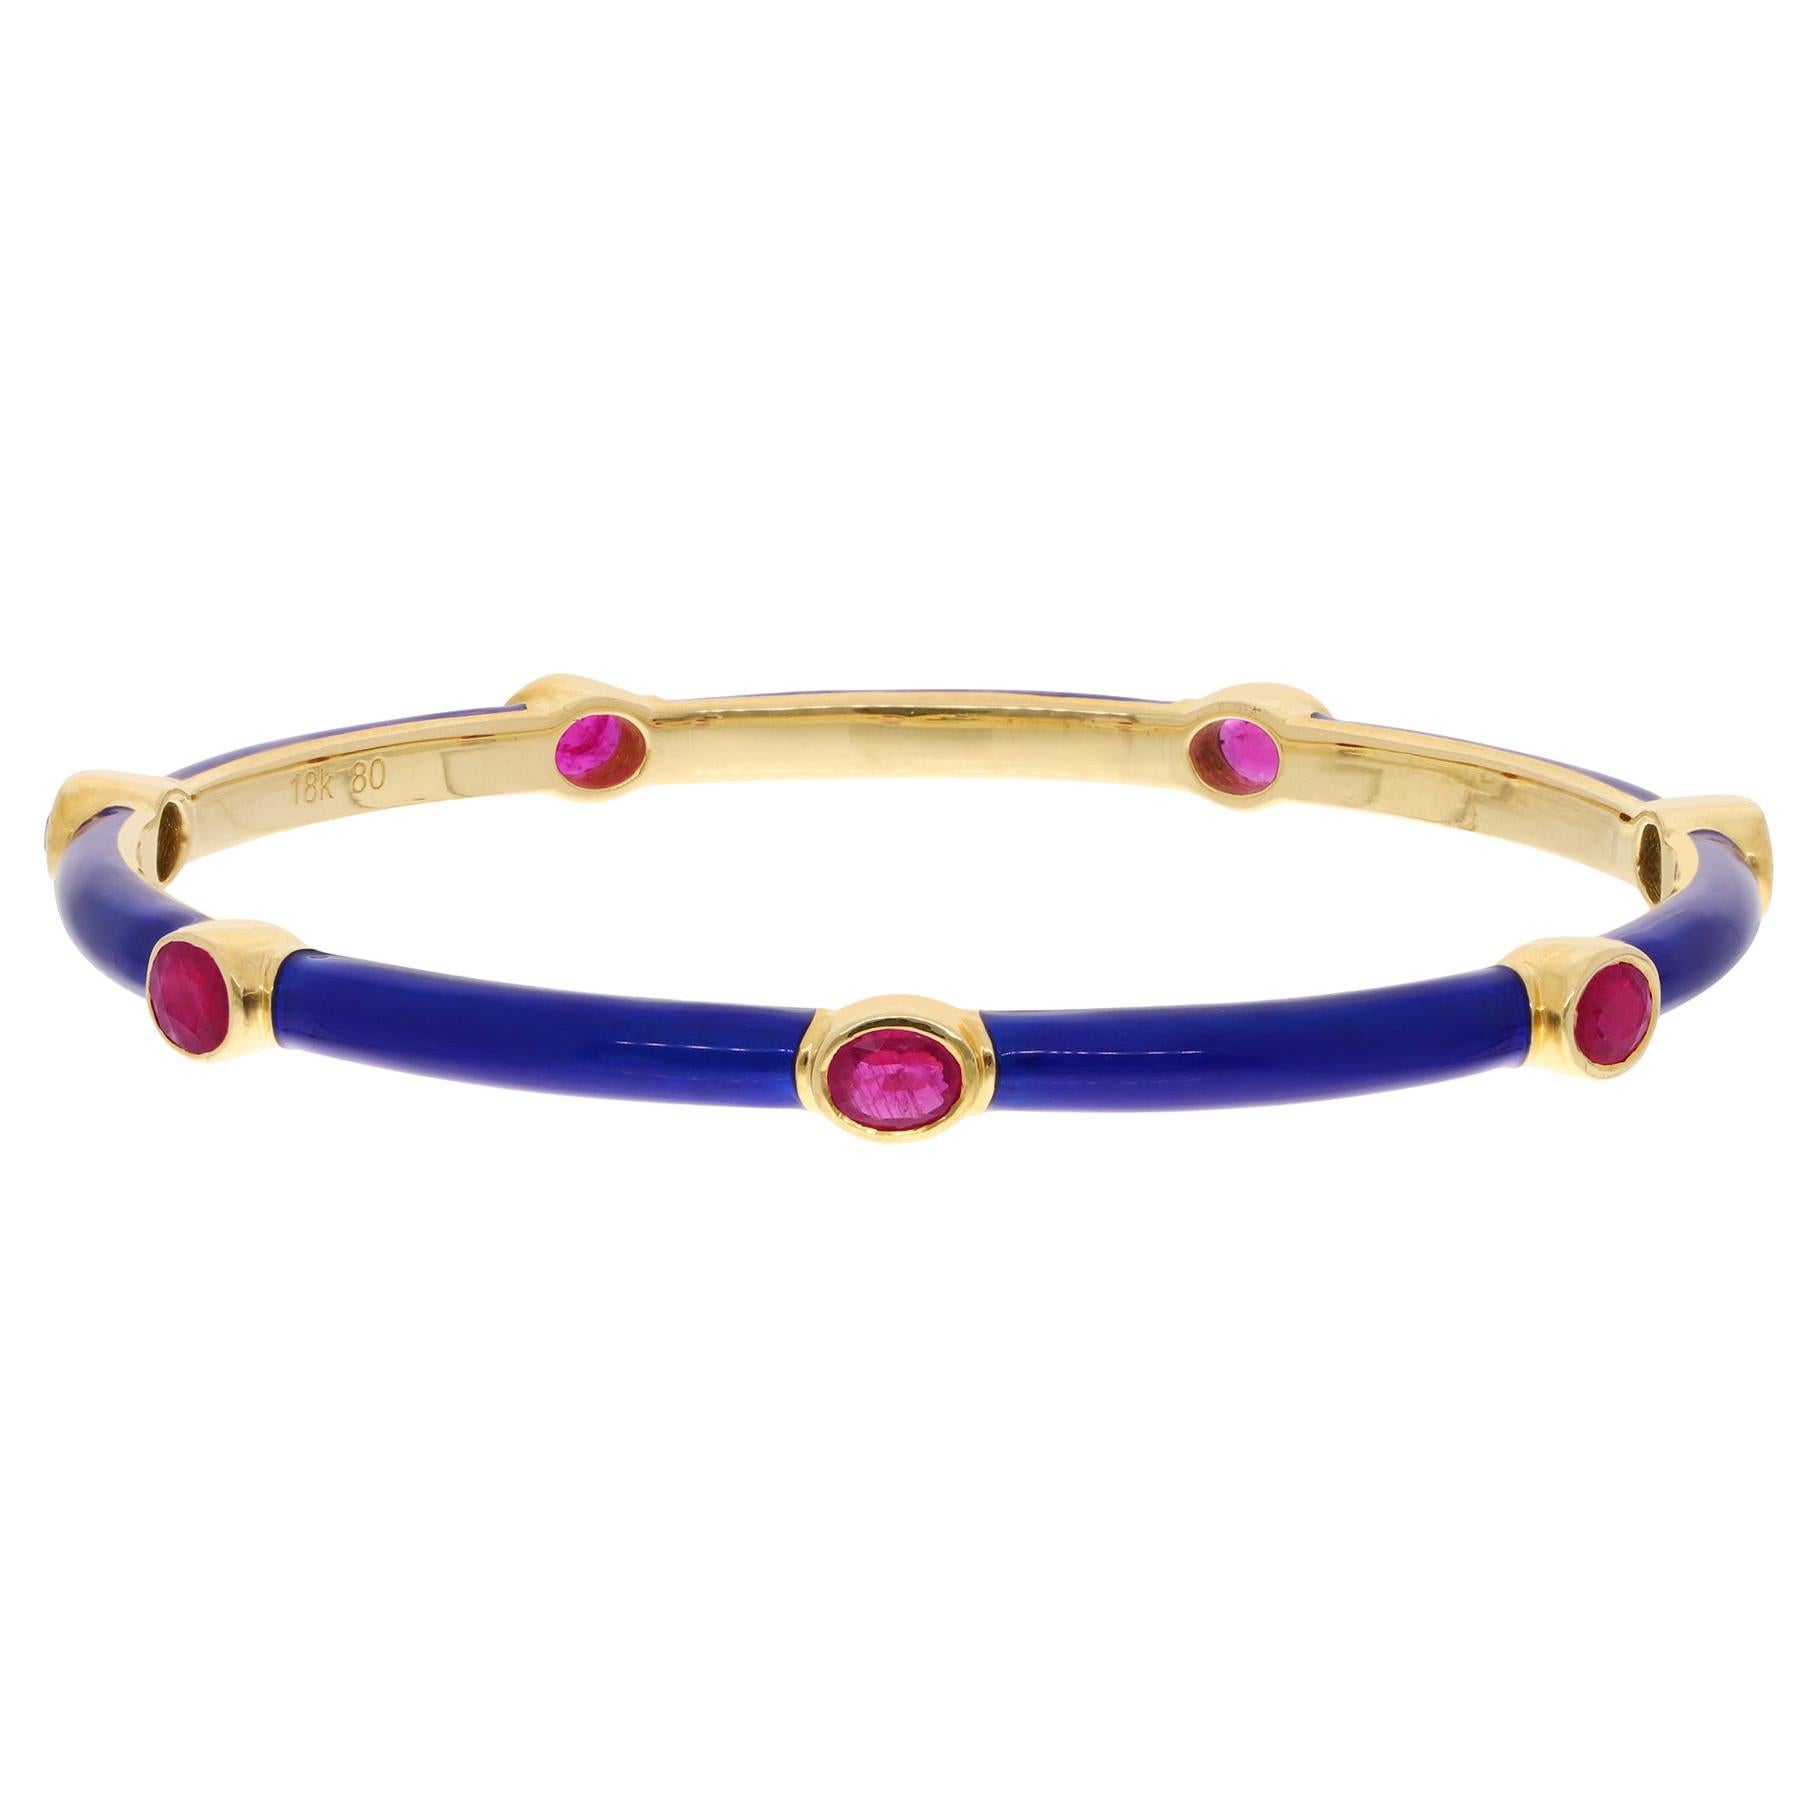 2.3 Carat Oval Ruby Gemstone Enamel Bangle Bracelet 14 Karat Yellow Gold Jewelry